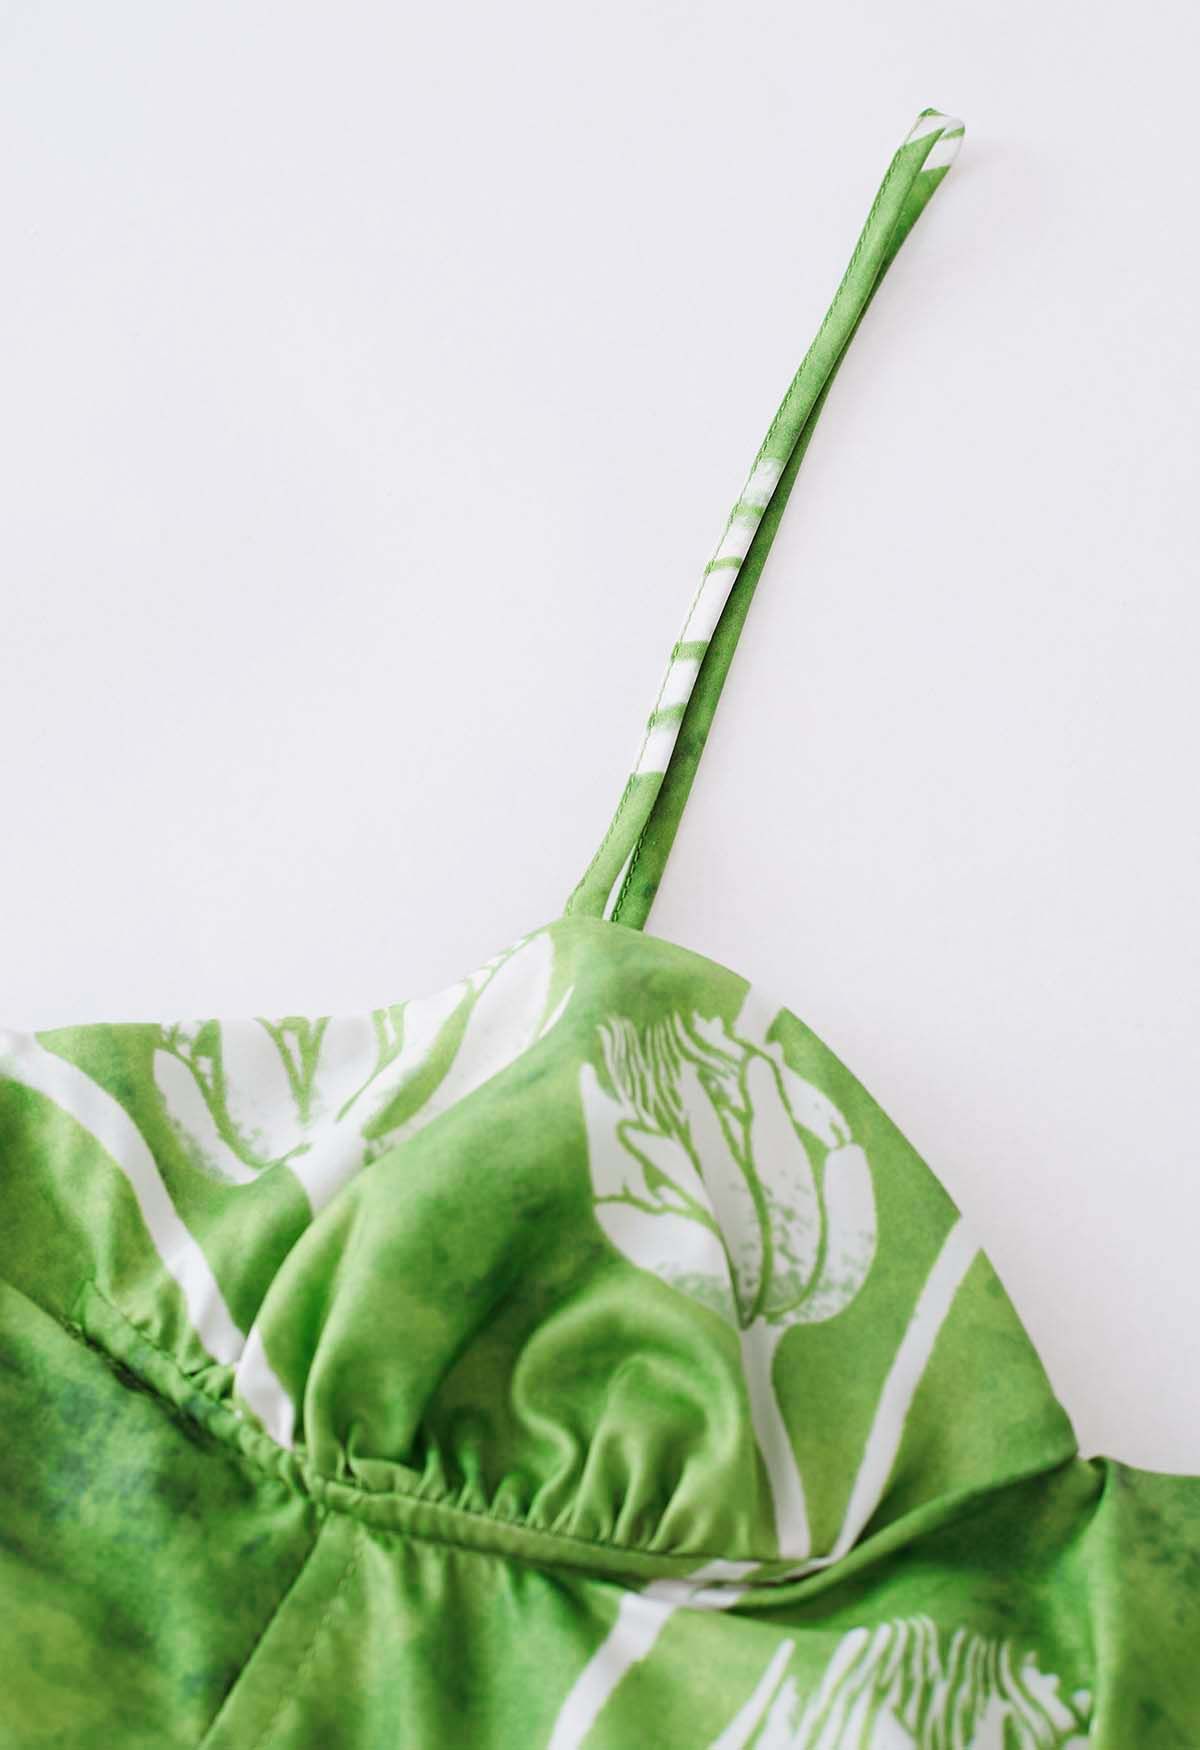 Green Twin Flower Buds Printed Cami Dress